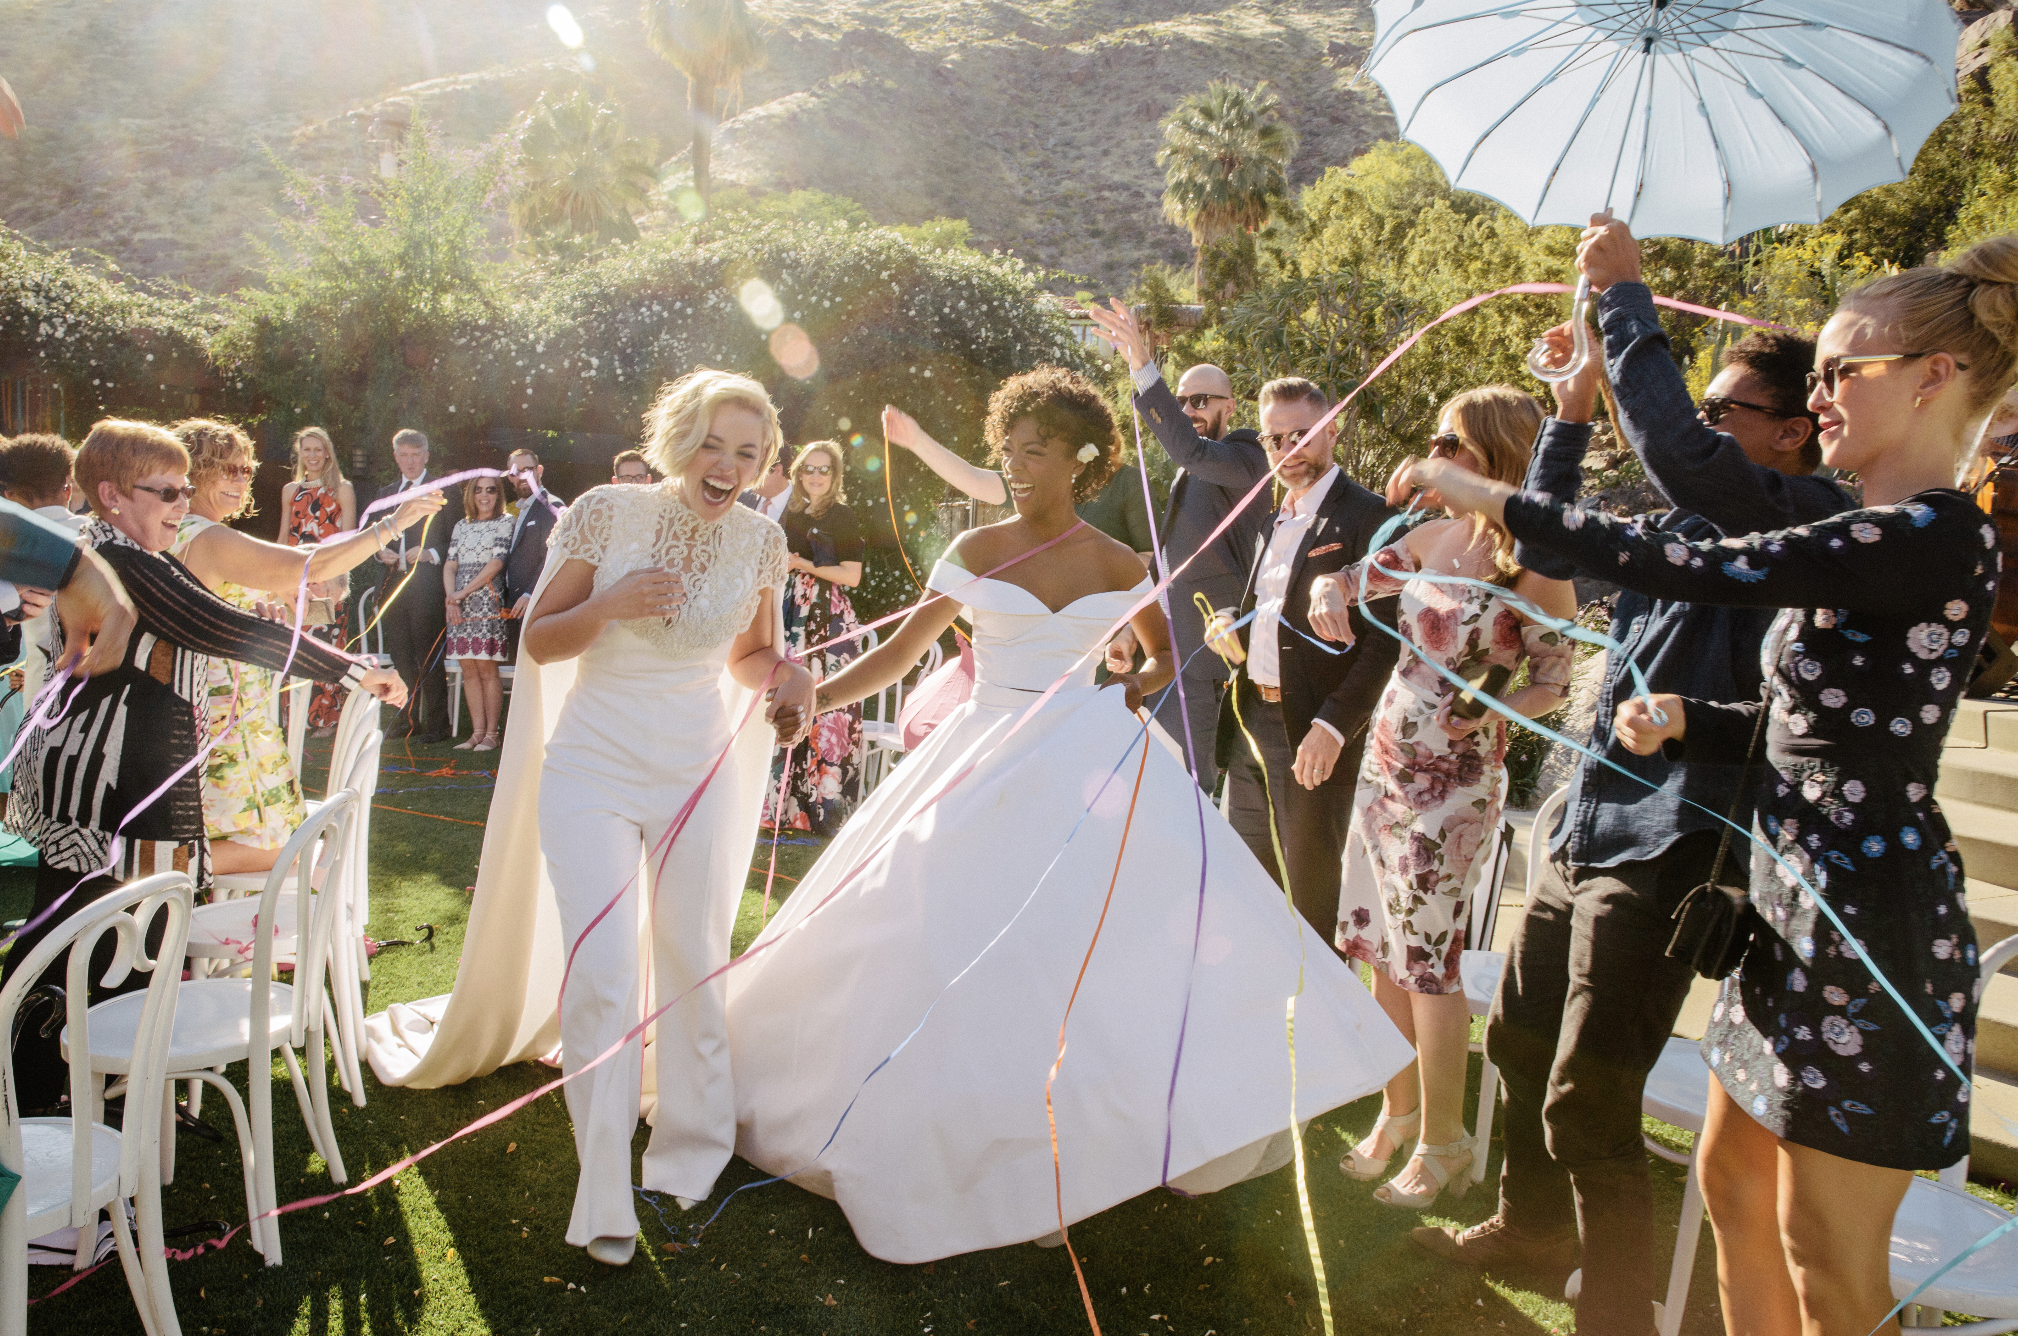 64 Best Wedding Planners 2020 - Top Event Organizers in the U.S.